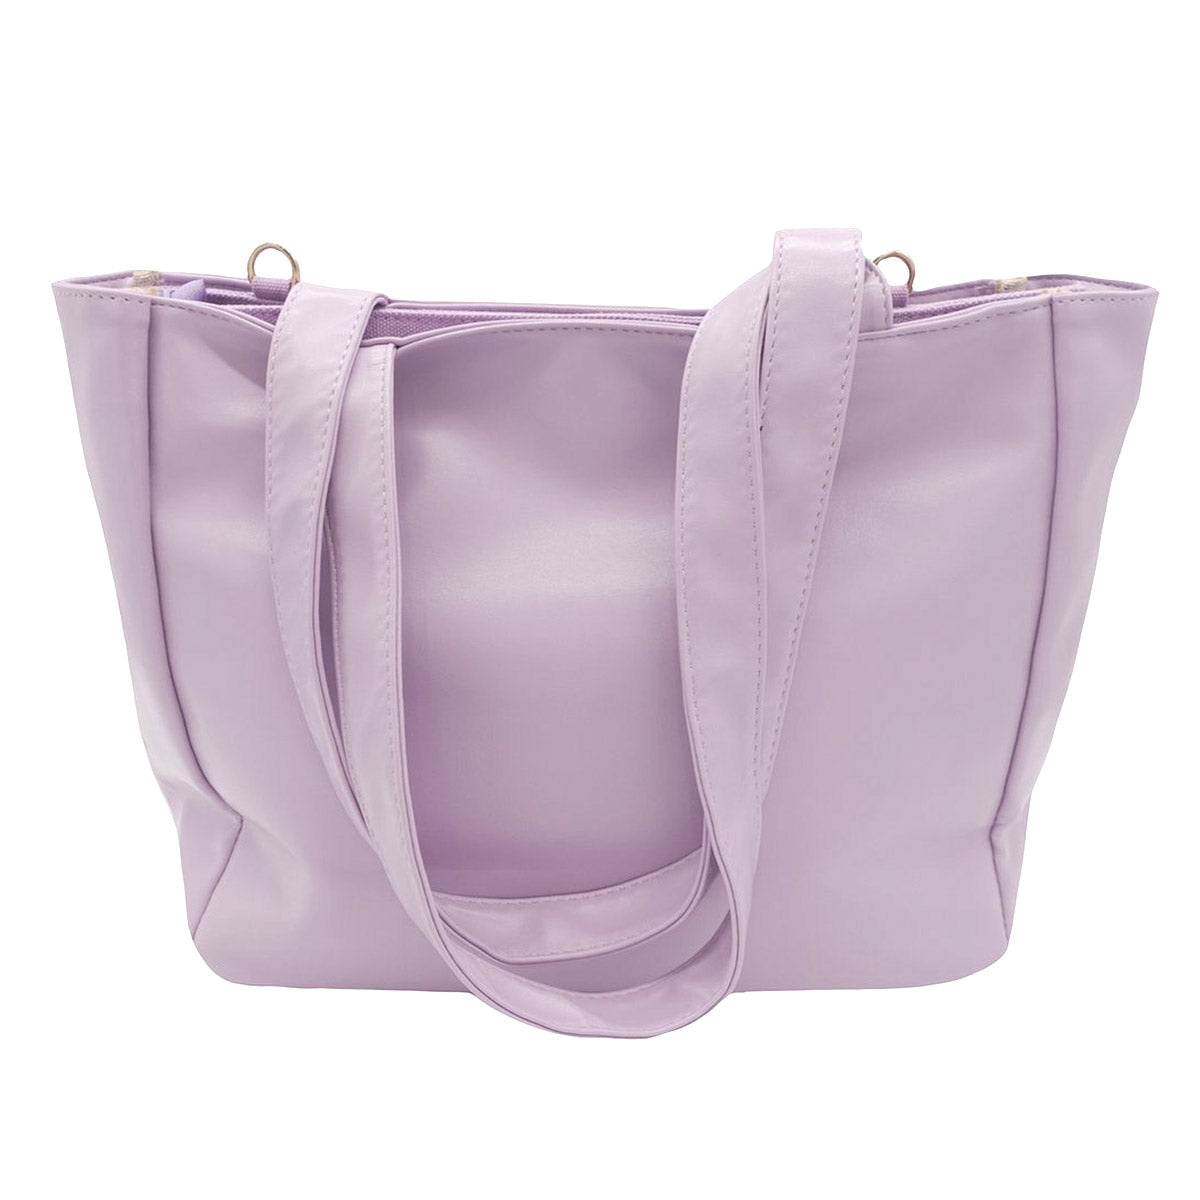 <tc>Ariko</tc> Itabag Handbag - Artistic bag Japan - Transparent compartment for Keyrings - Pins - Purple